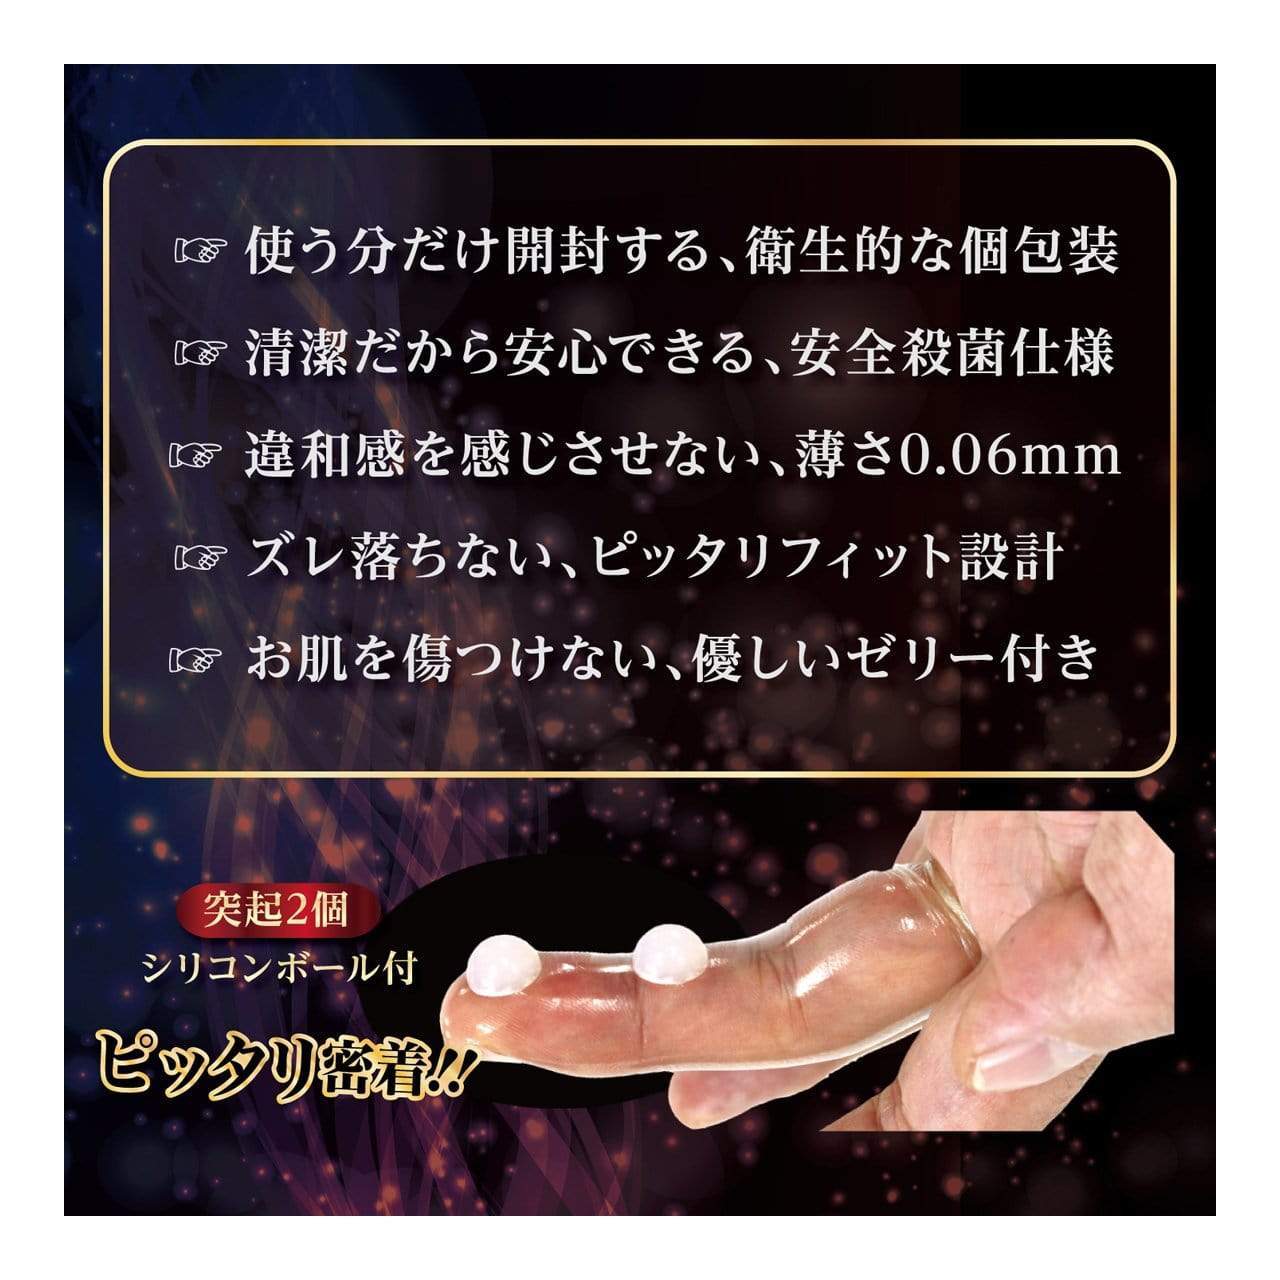 Kiss Me Love - Finger Skin DX G2 Finger Sleeves 6 Pieces (Clear) Novelties (Non Vibration) 4560444118151 CherryAffairs